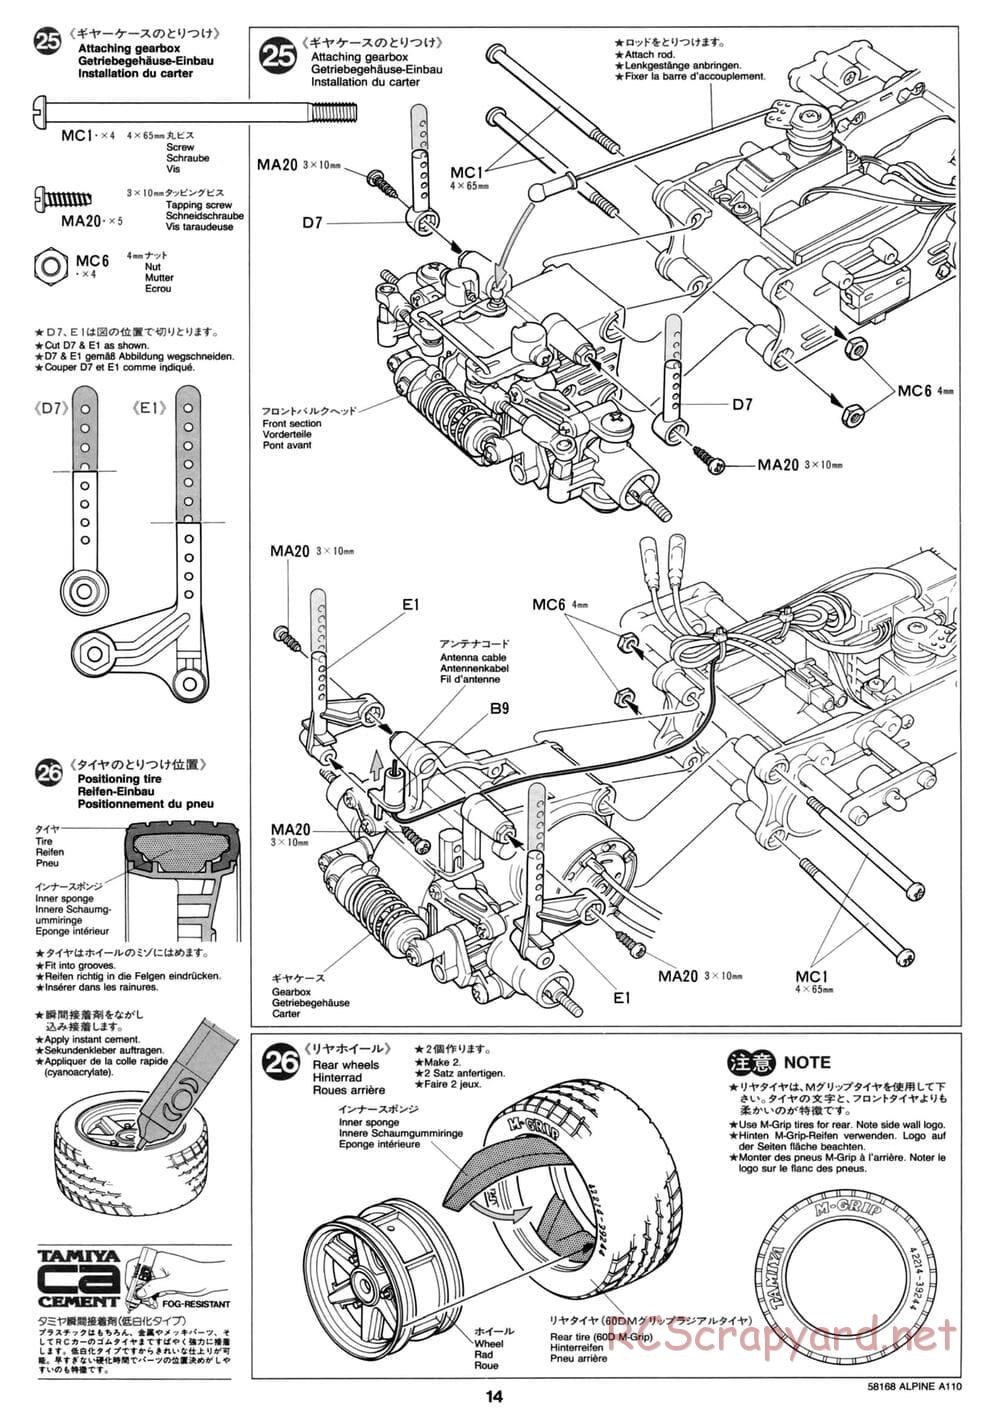 Tamiya - Alpine A110 - M02 Chassis - Manual - Page 14